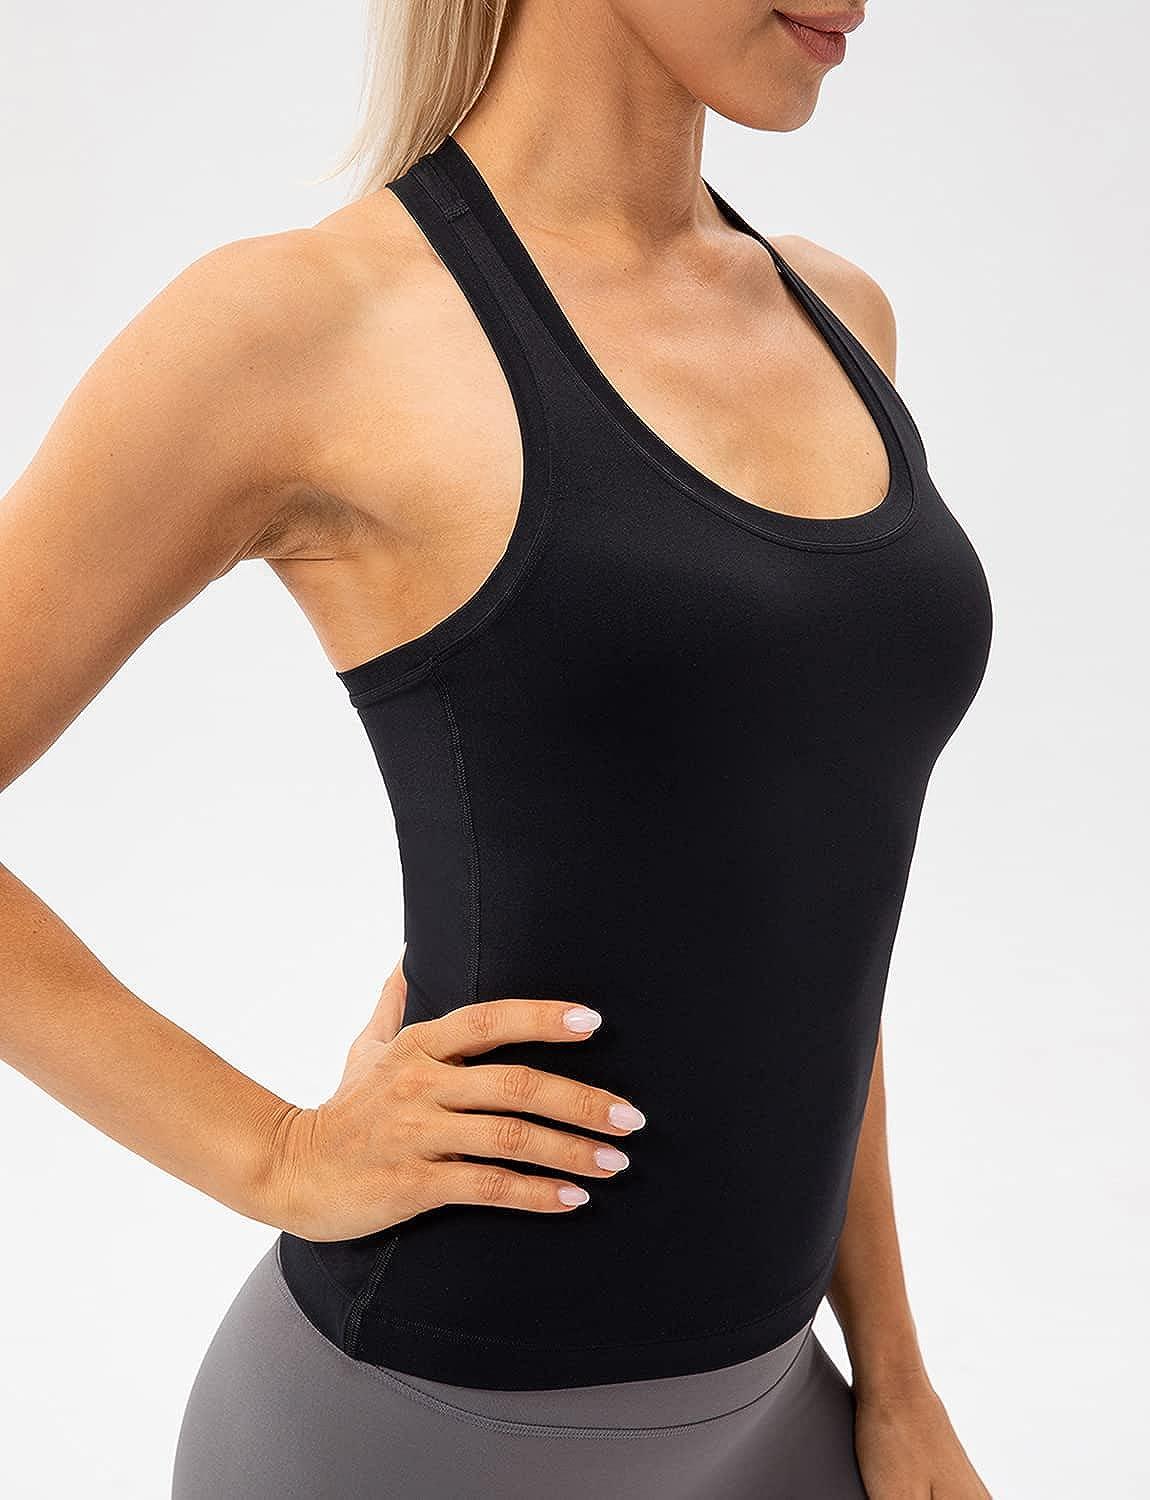 Women's Tank Tops with Shelf Bra Racerback Workout Yoga Top Cotton  Undershirt